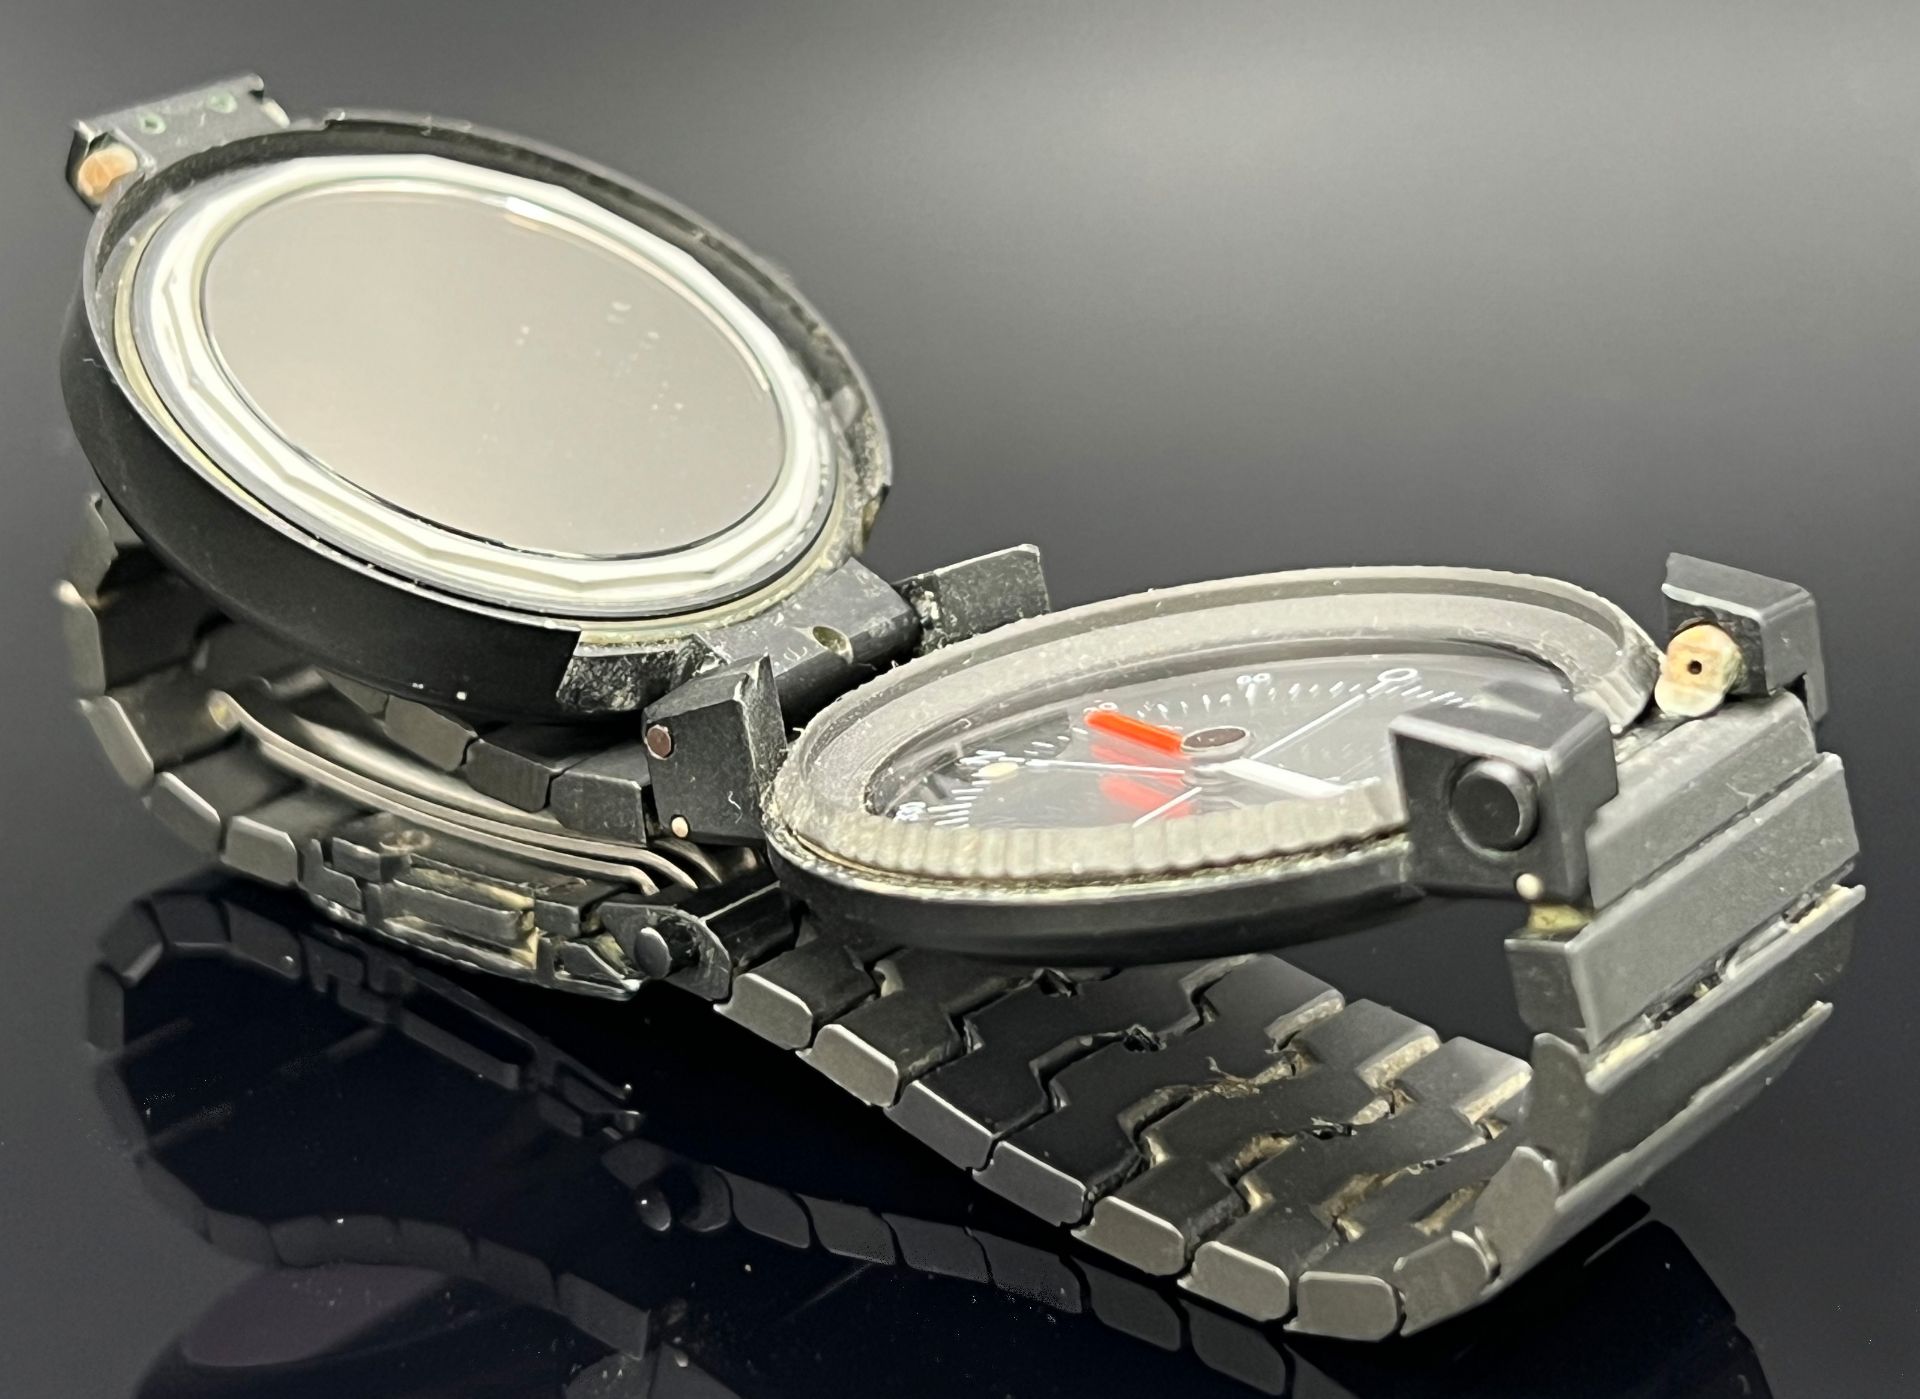 IWC Porsche Design men's wristwatch with compass. Automatic. Ref. 3510. - Image 6 of 10